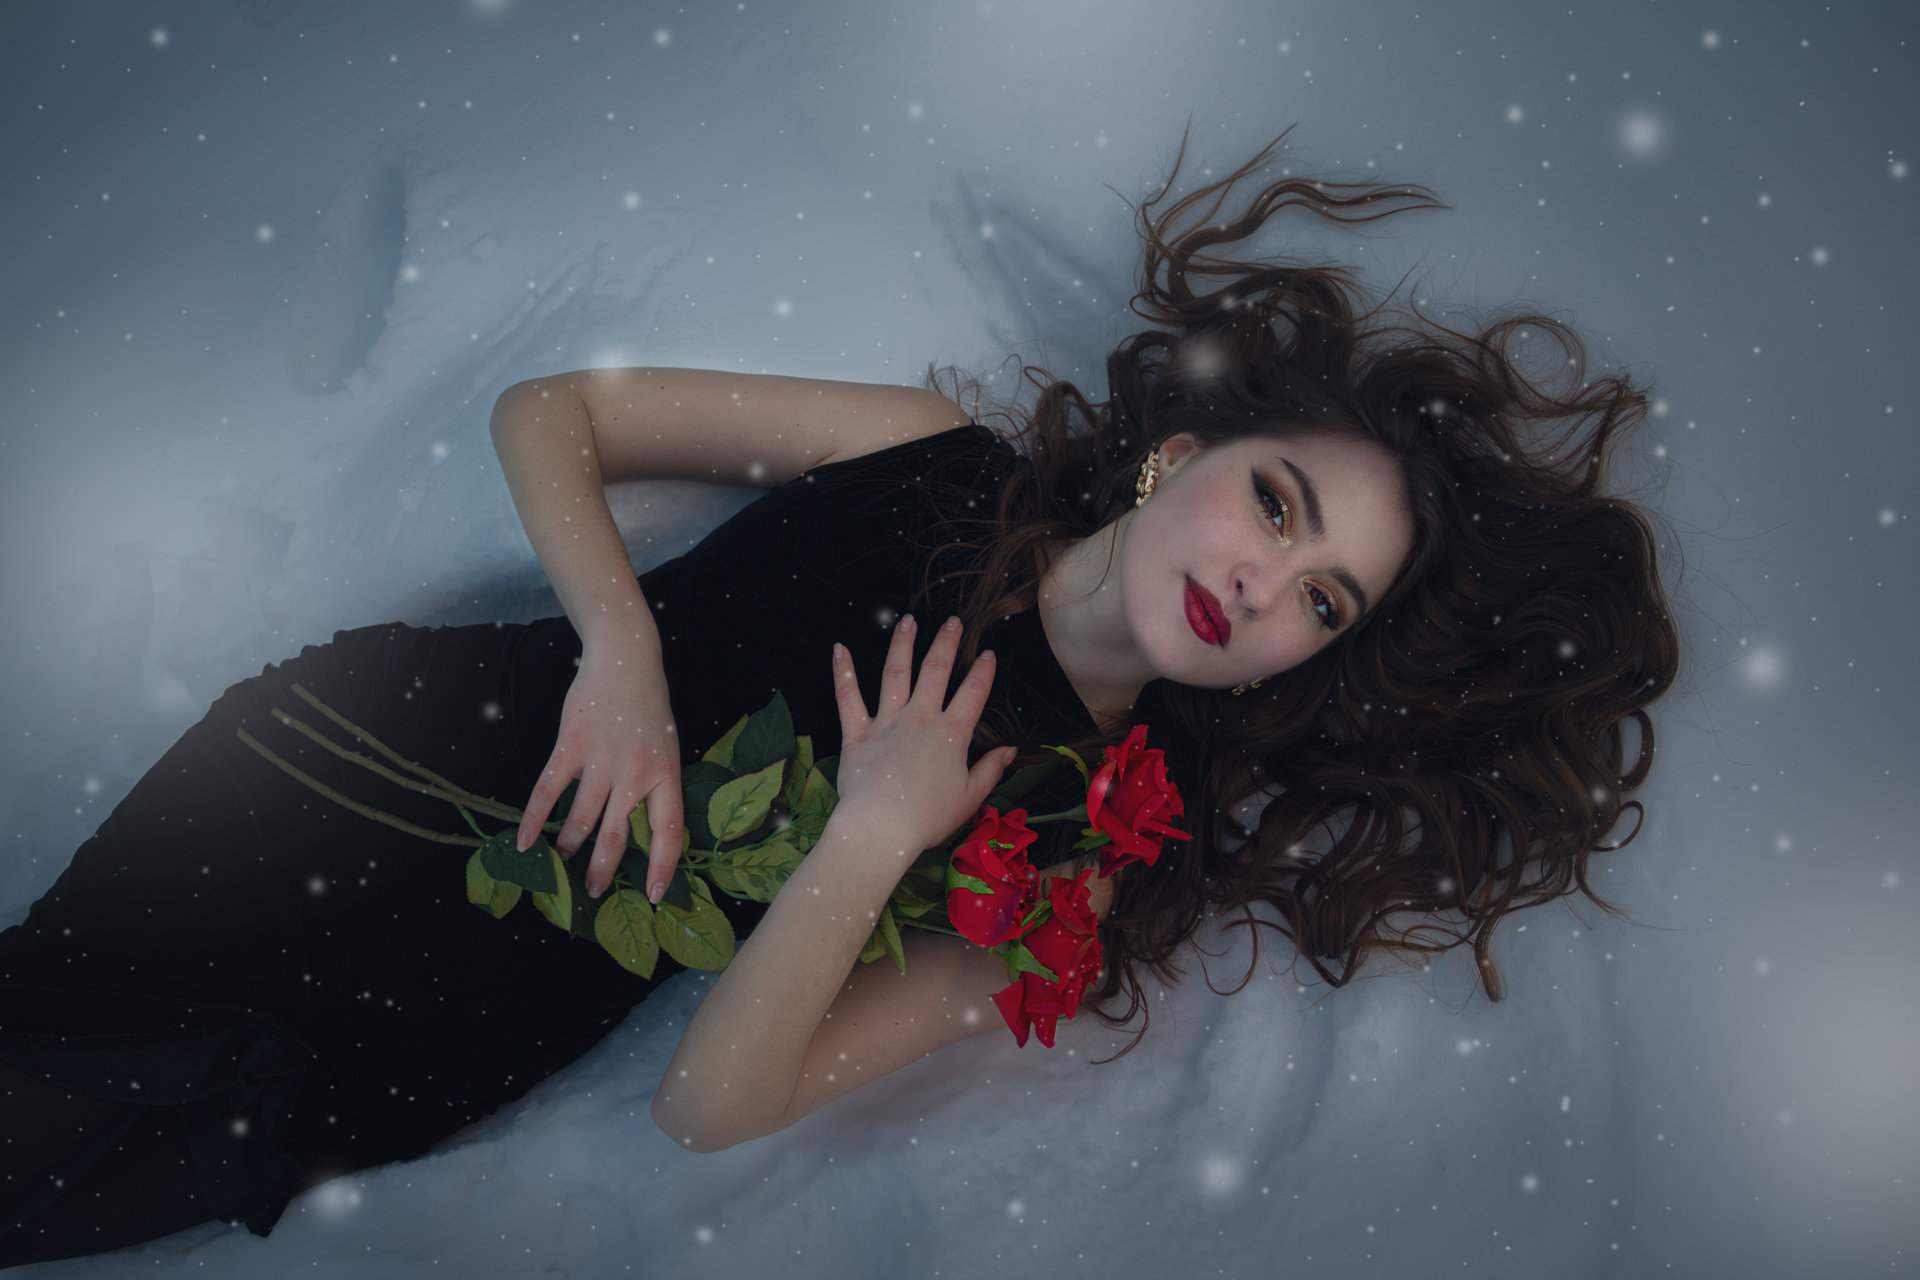 Snow fairytale | Author Detelina Lyubenova - Luckycaptures | PHOTO FORUM